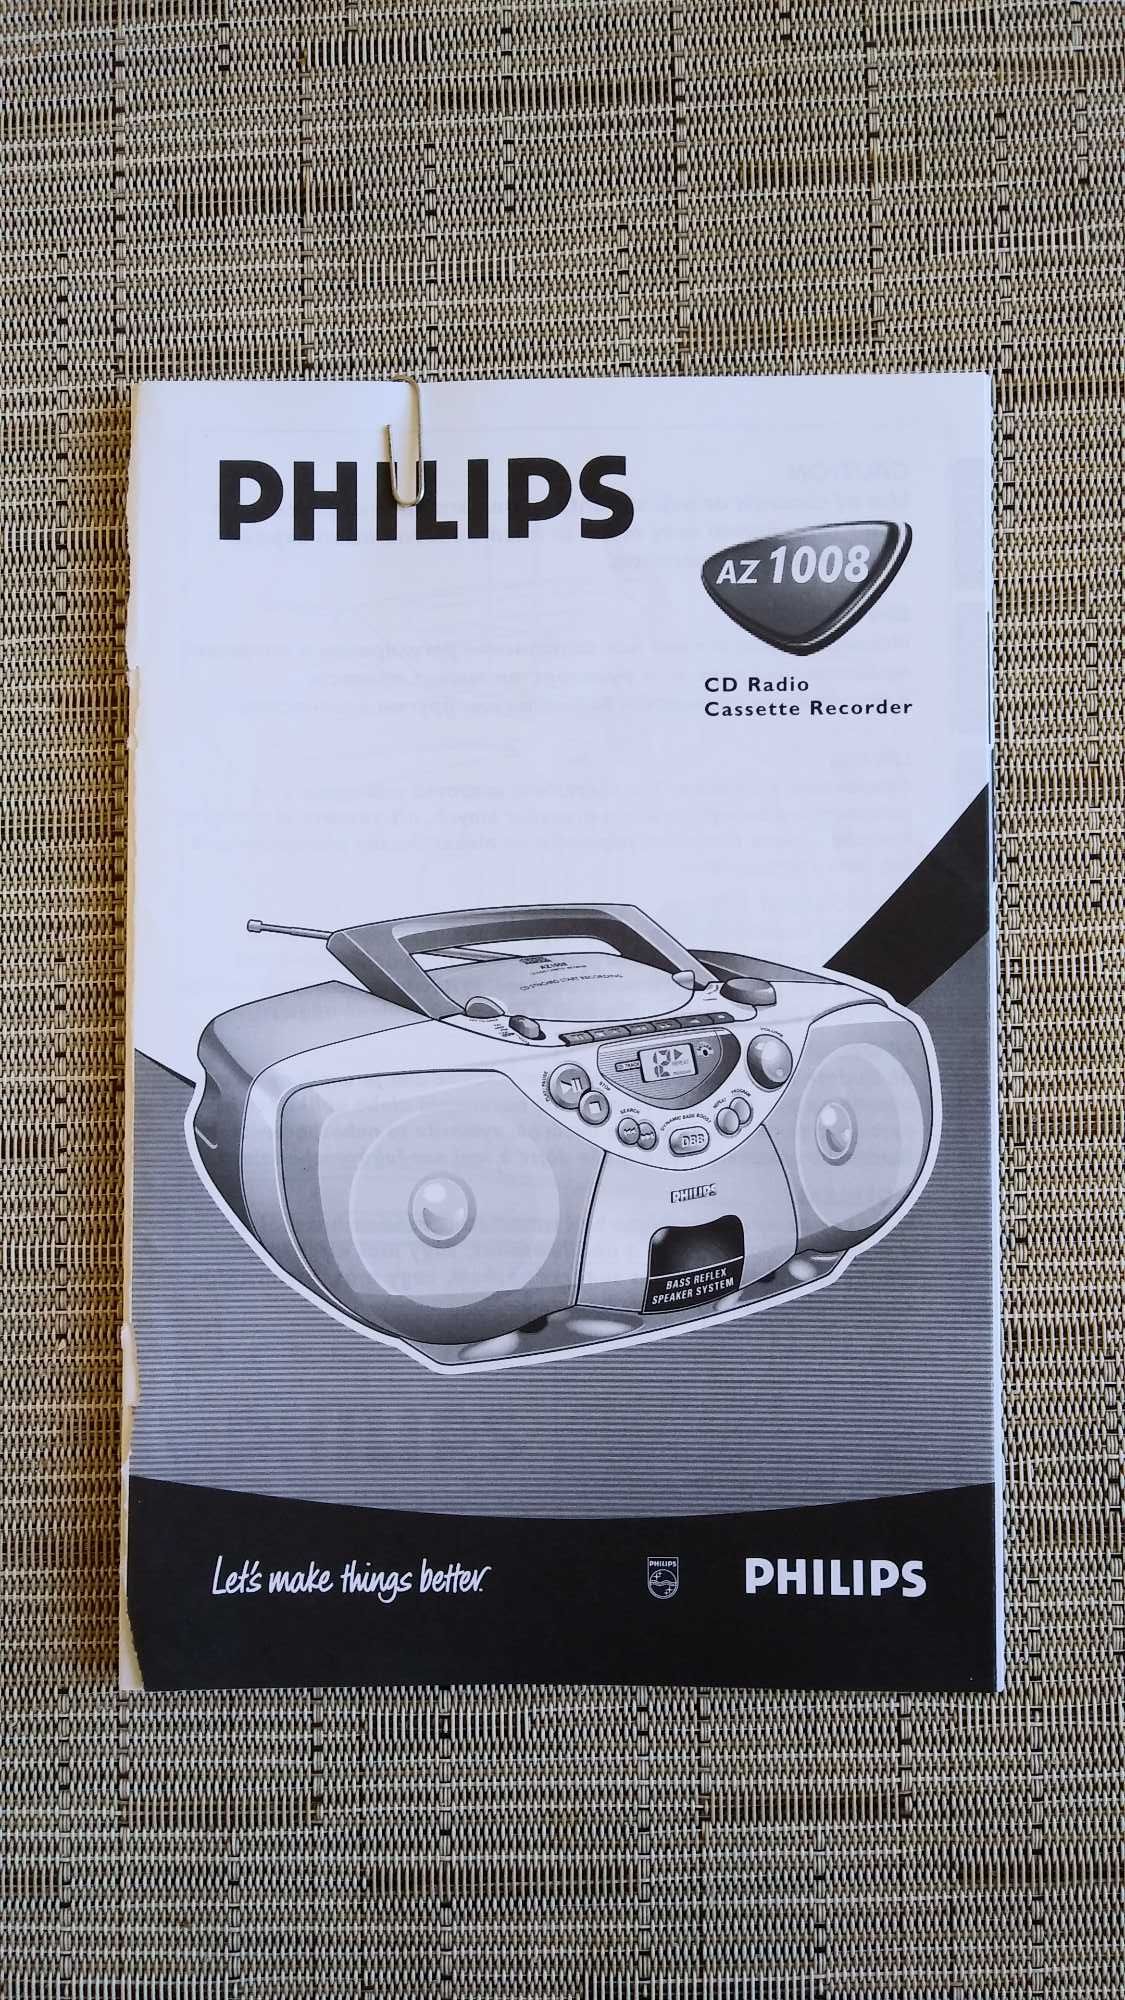 Odtwarzacz CD, radio i magnetofon kasetowy PHILIPS